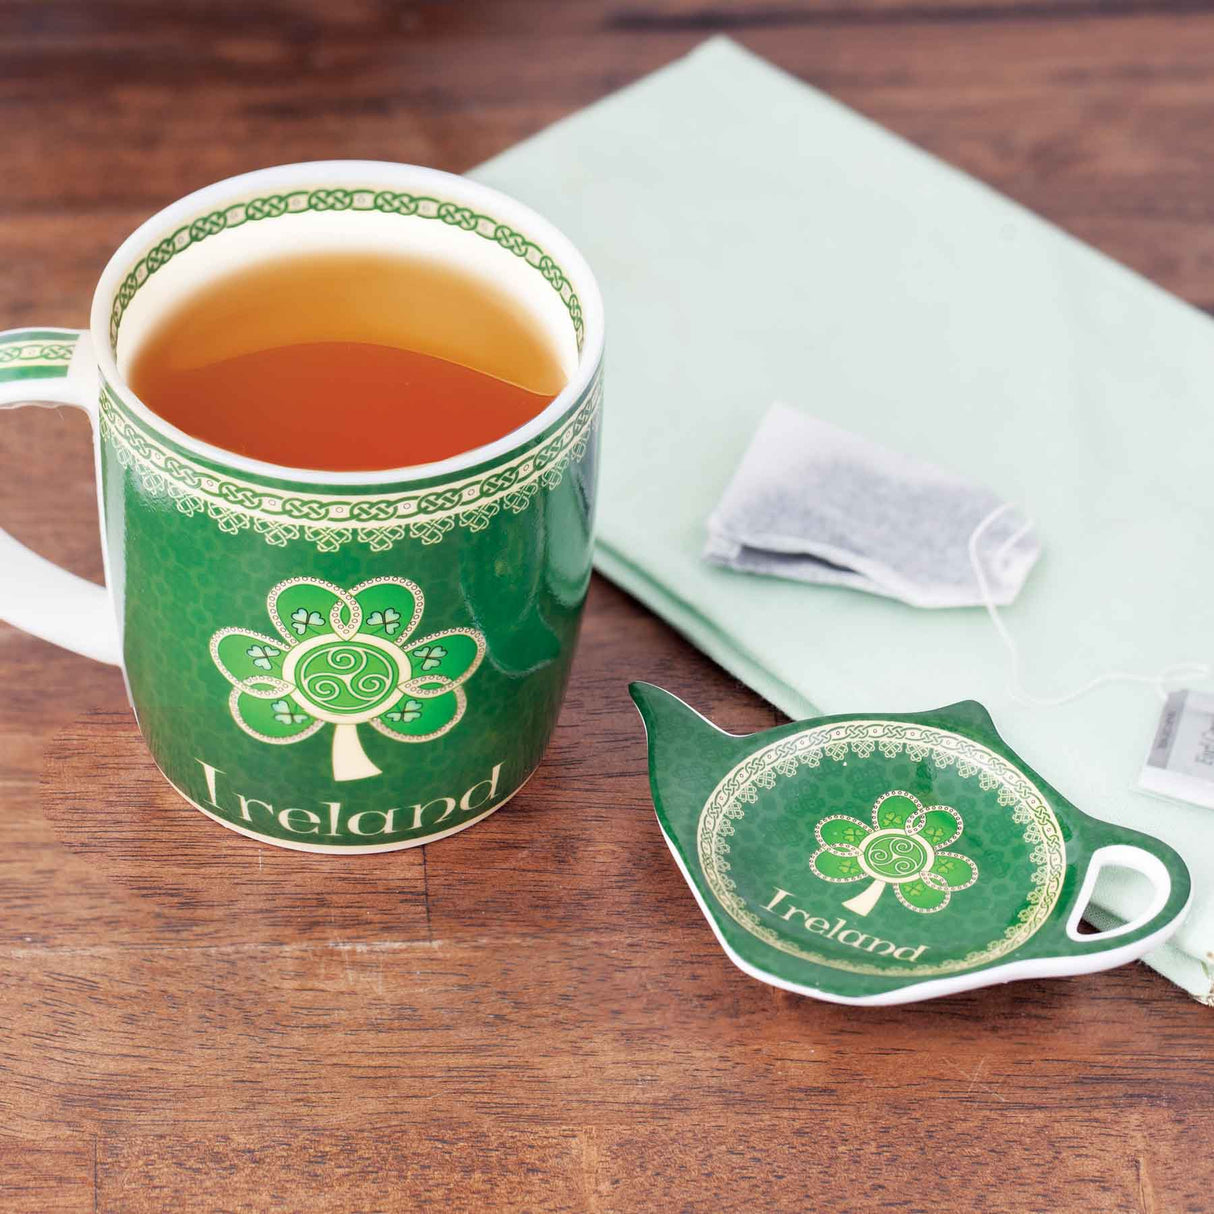 Ireland Tea Bag Holder - Creative Irish Gifts